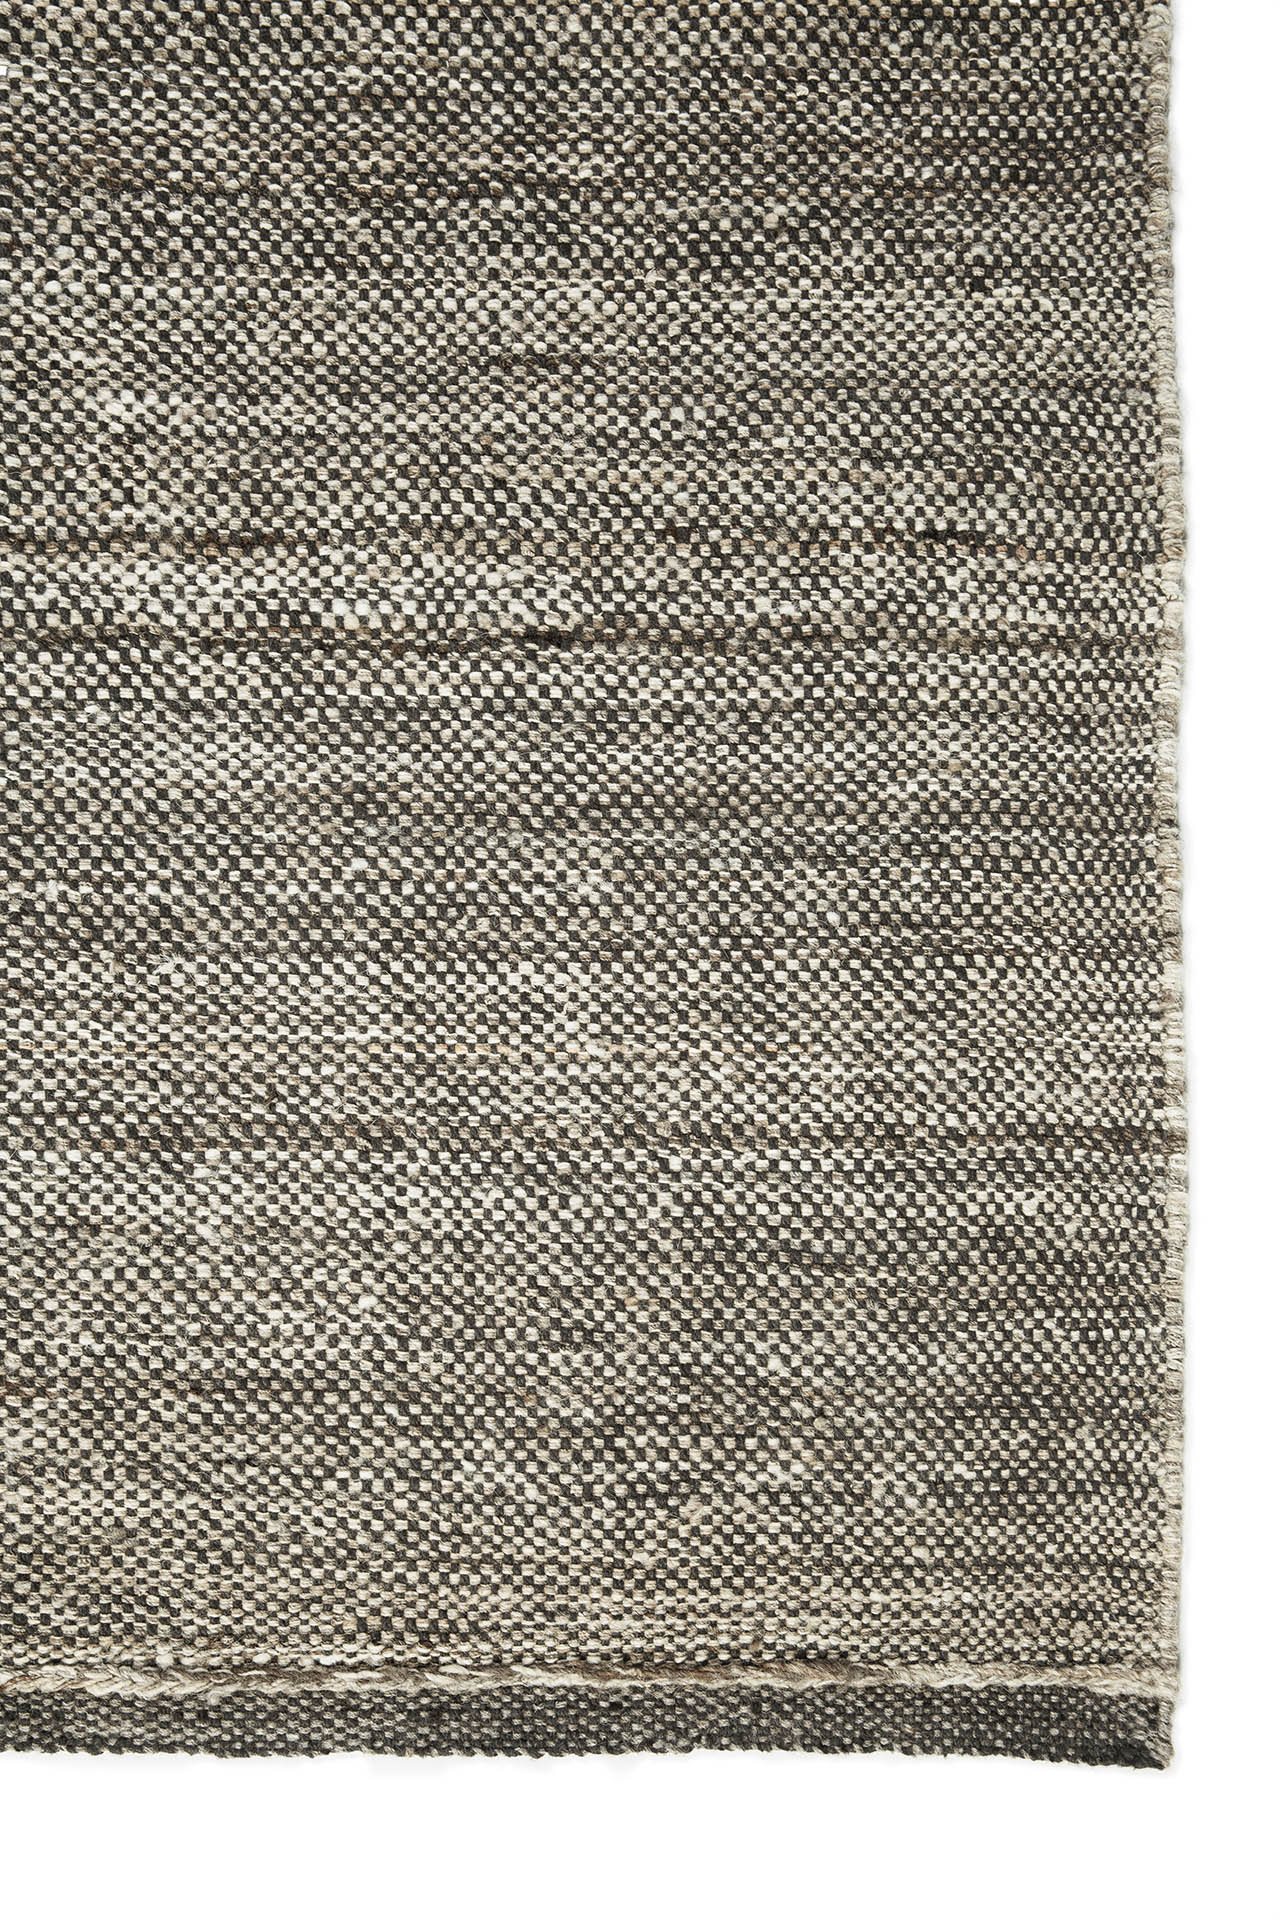 Ethnicraft - Checked Natural kilim tapijt (250 x 350 x 1 cm)